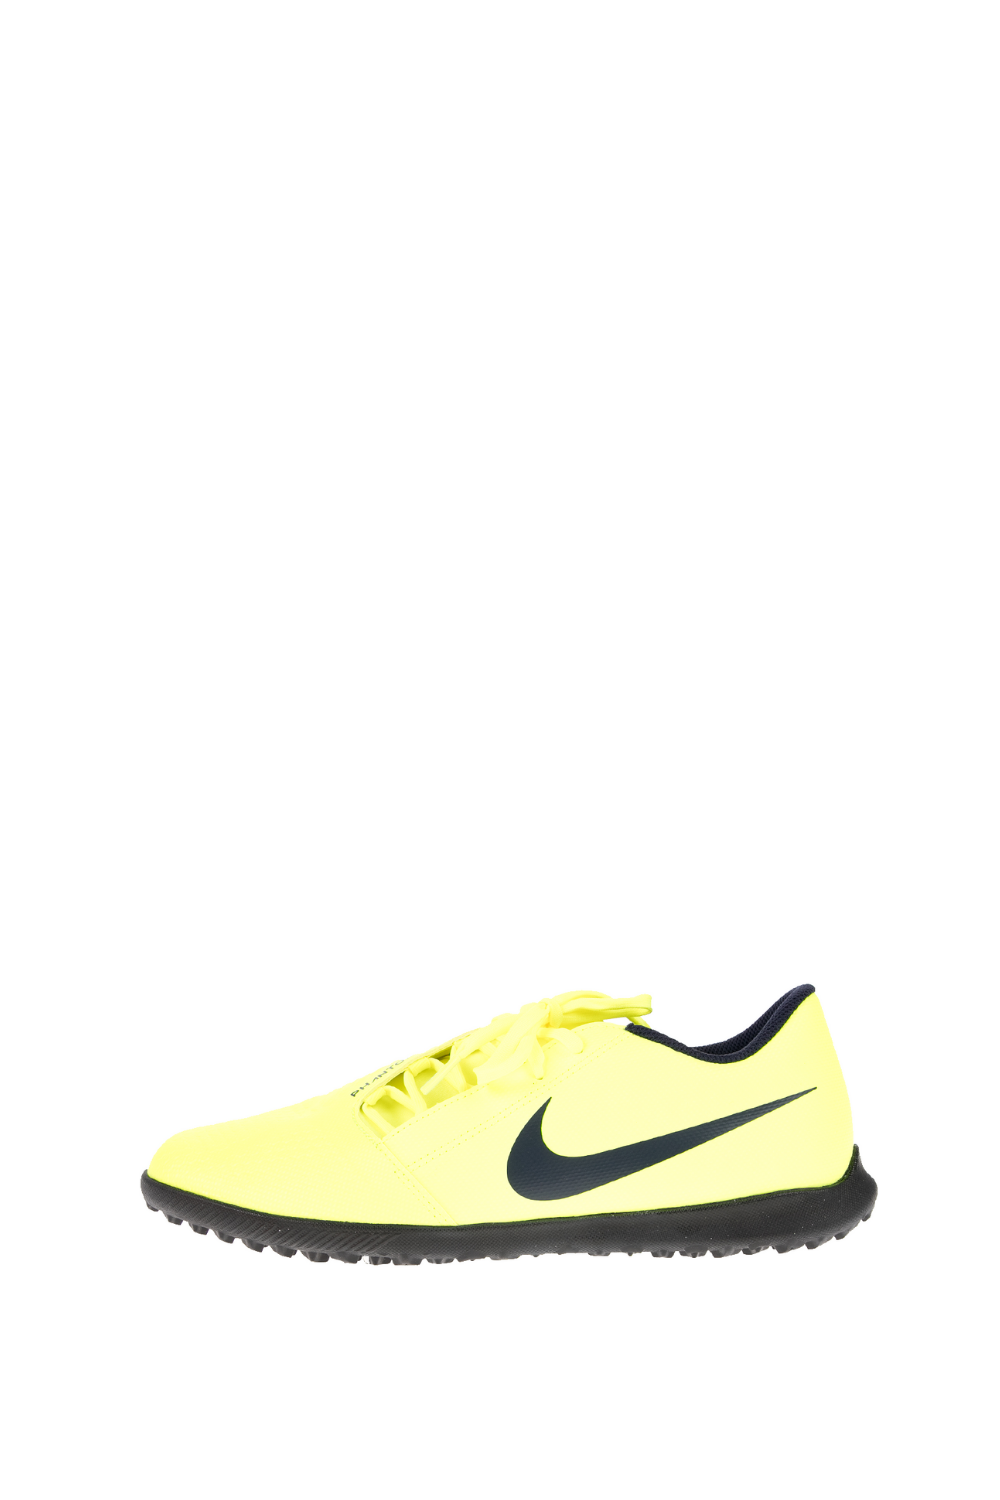 NIKE - Unisex παπούτσια football PHANTOM VENOM CLUB TF κίτρινα Ανδρικά/Παπούτσια/Αθλητικά/Football